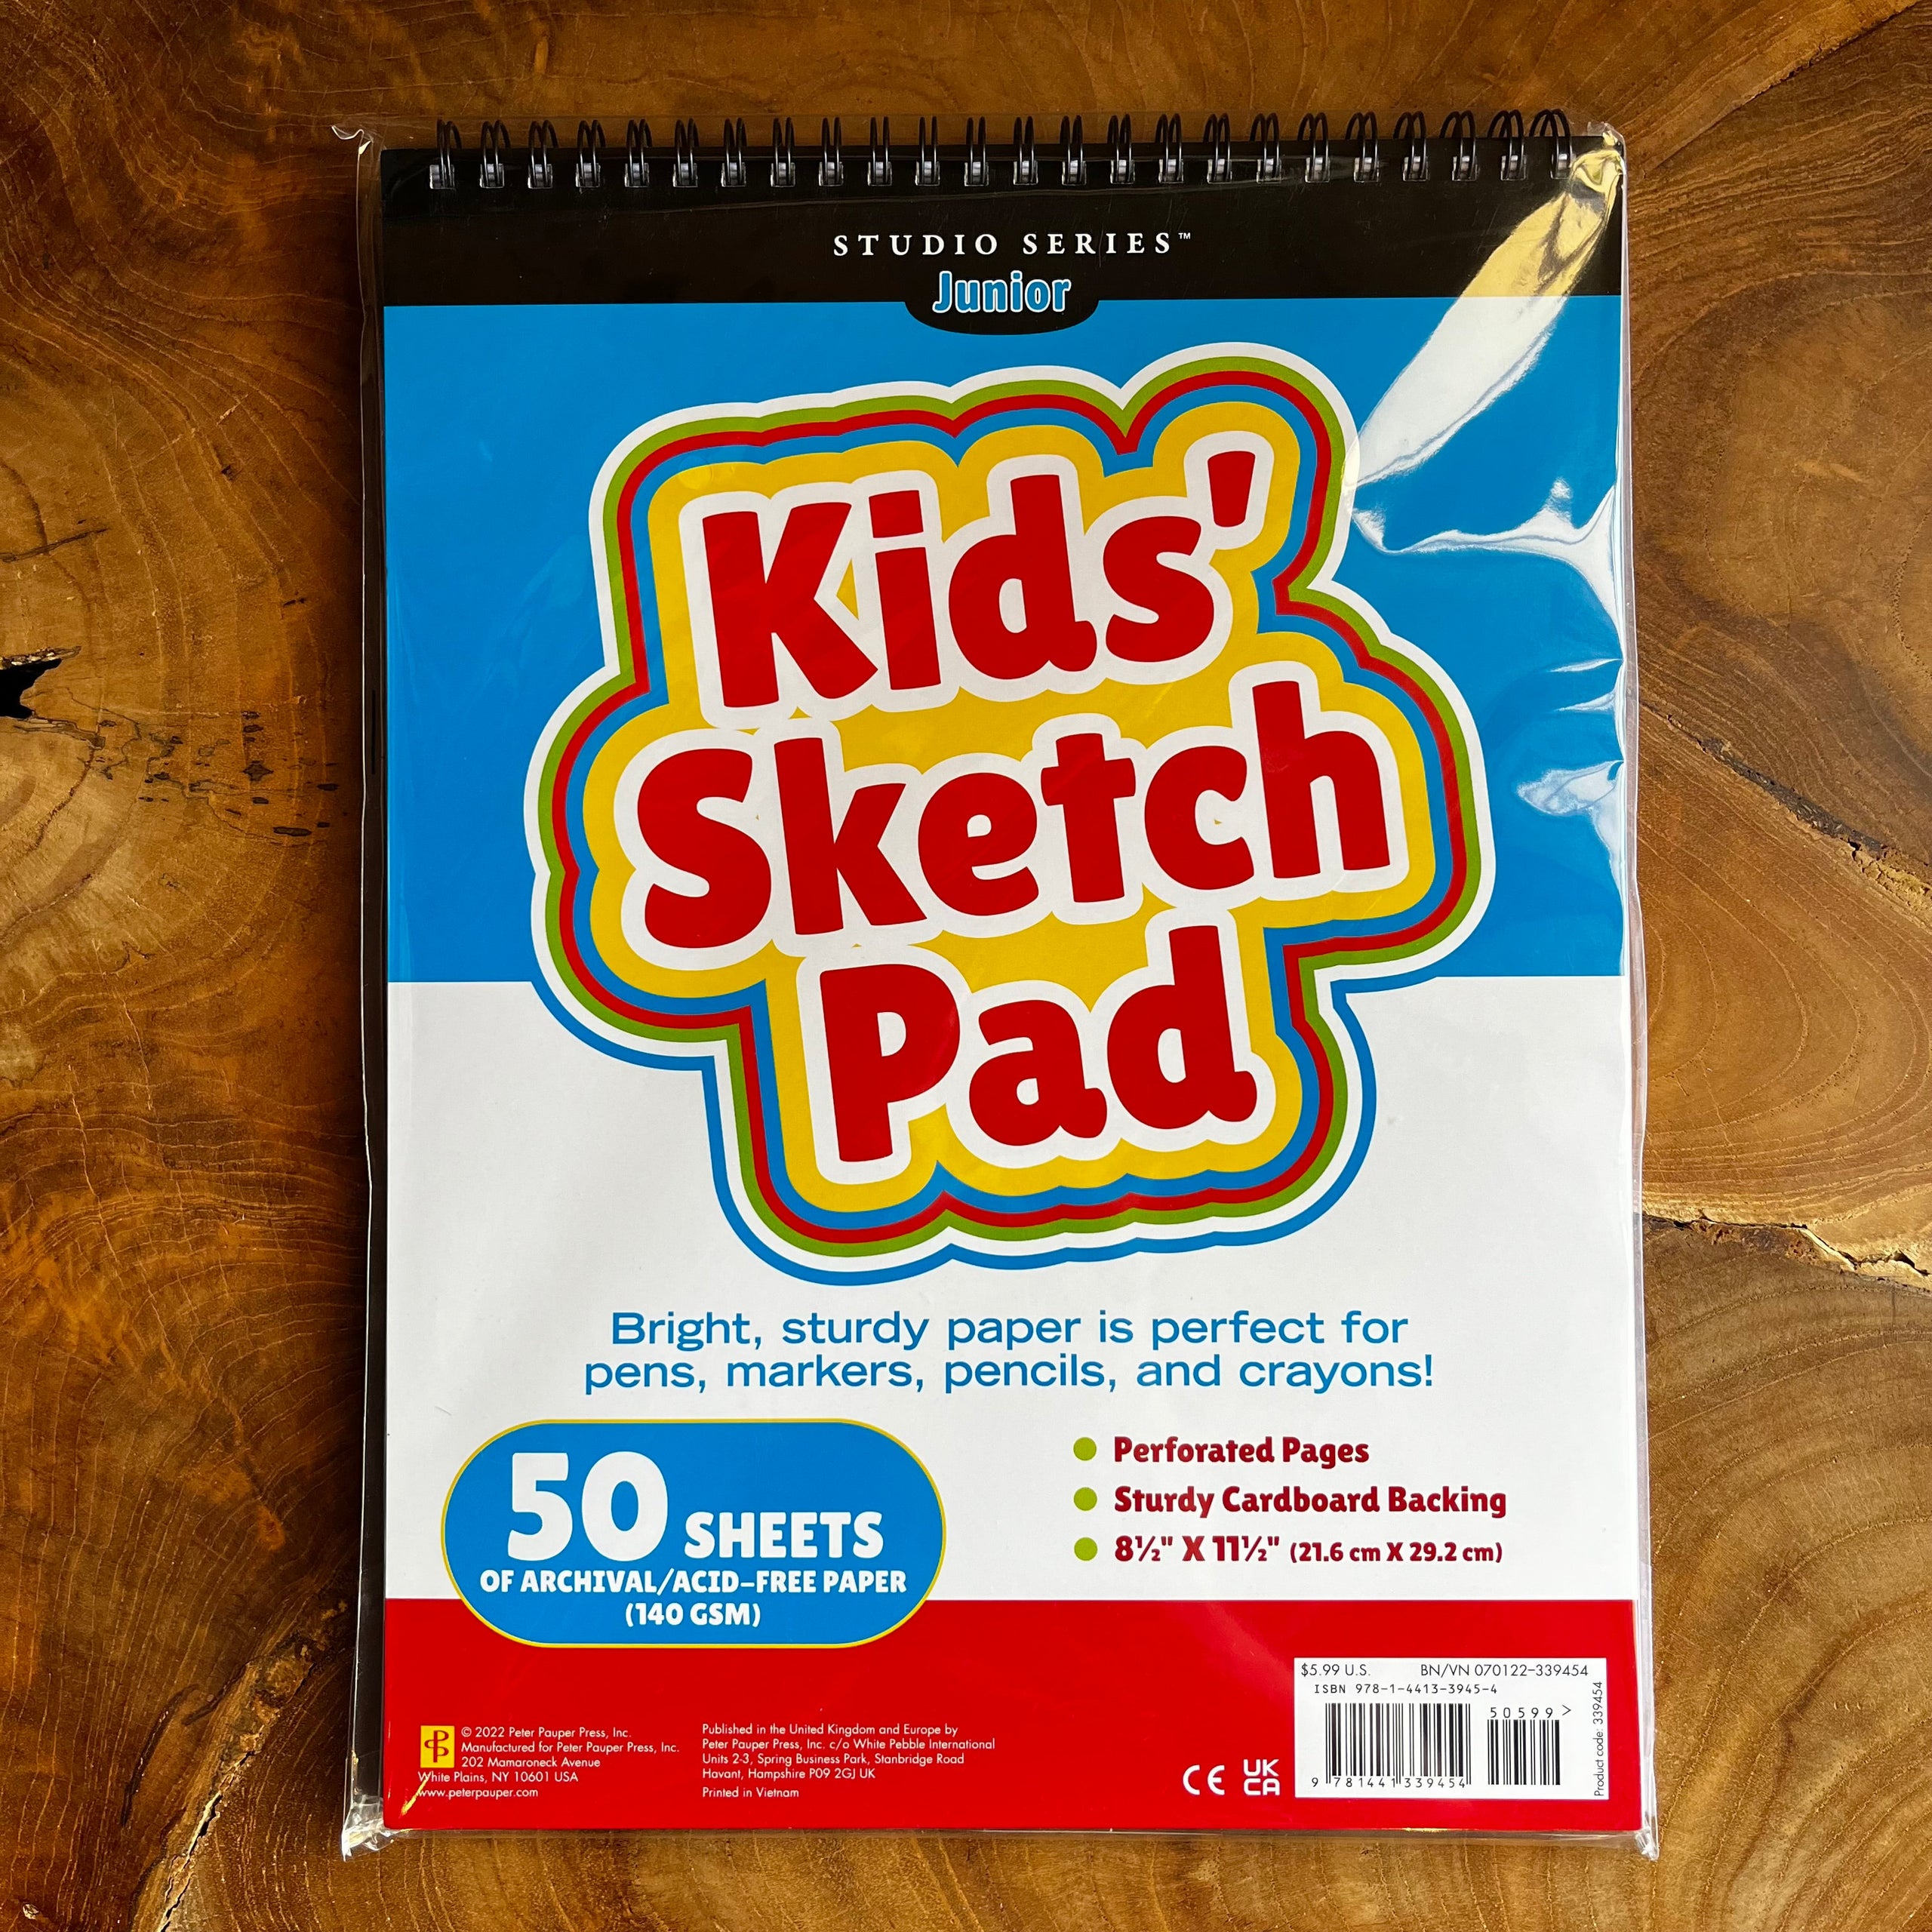 Kids' Sketch Pad